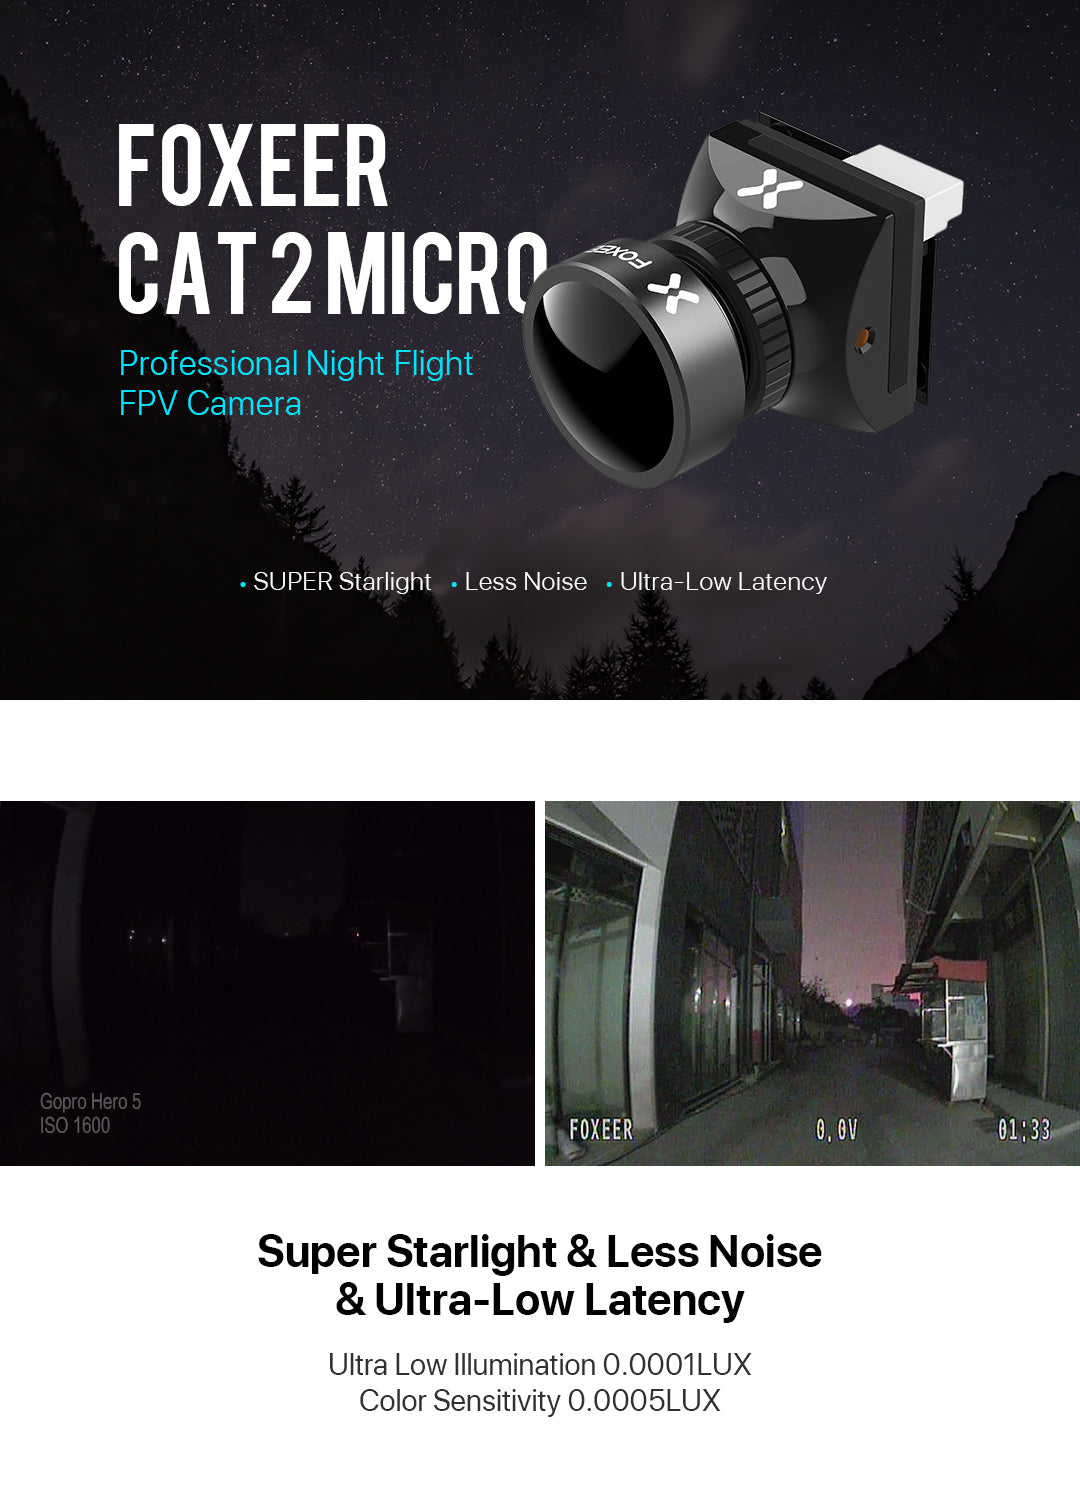 Foxeer Cat 2 Mini Super Starlight FPV Camera